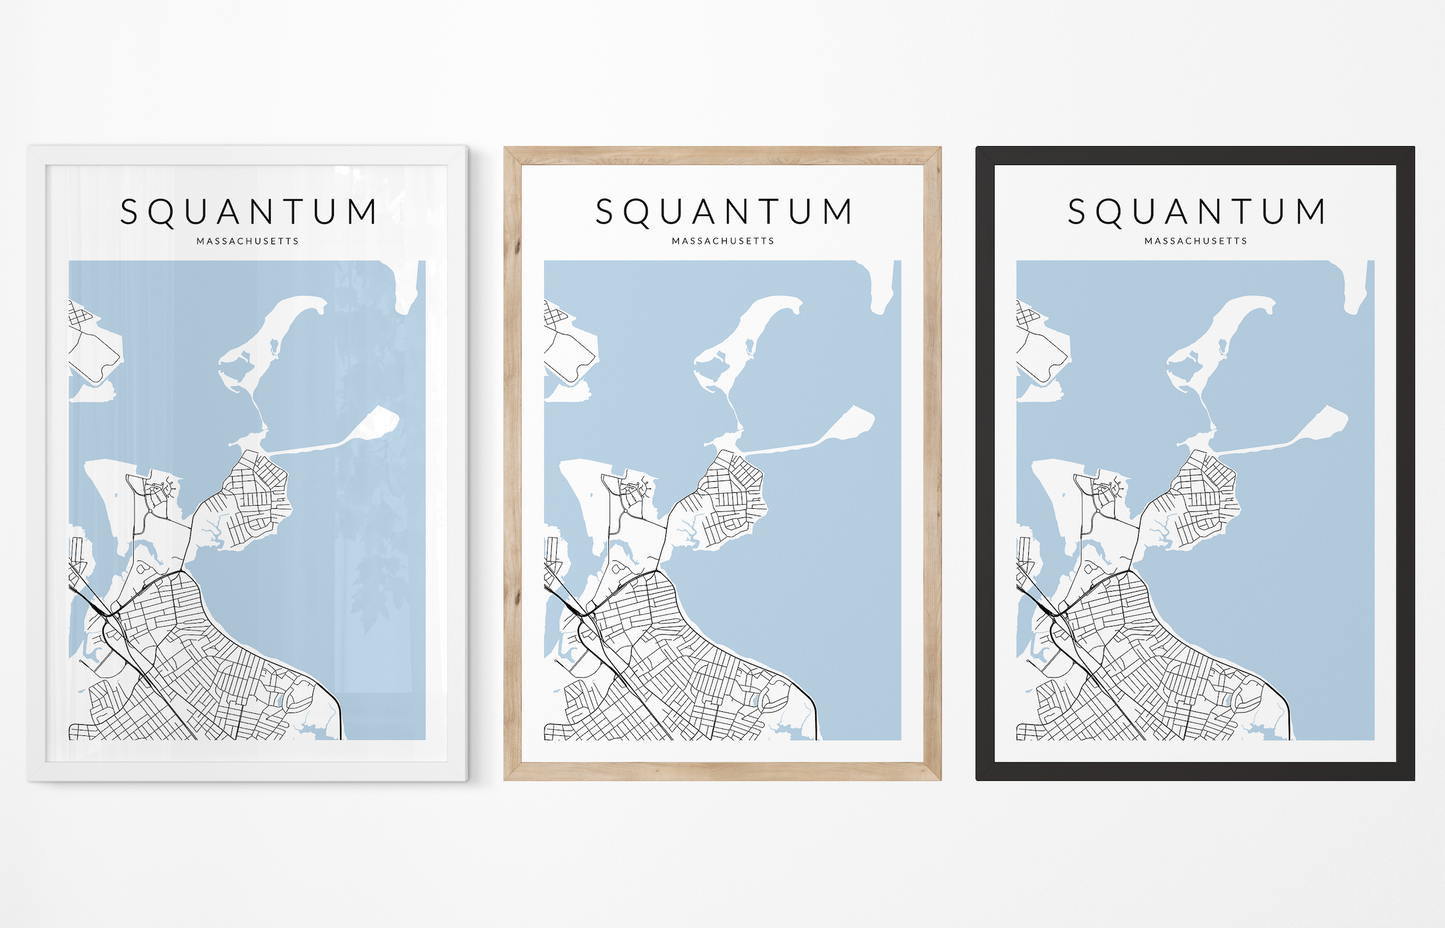 Squantum Map Print